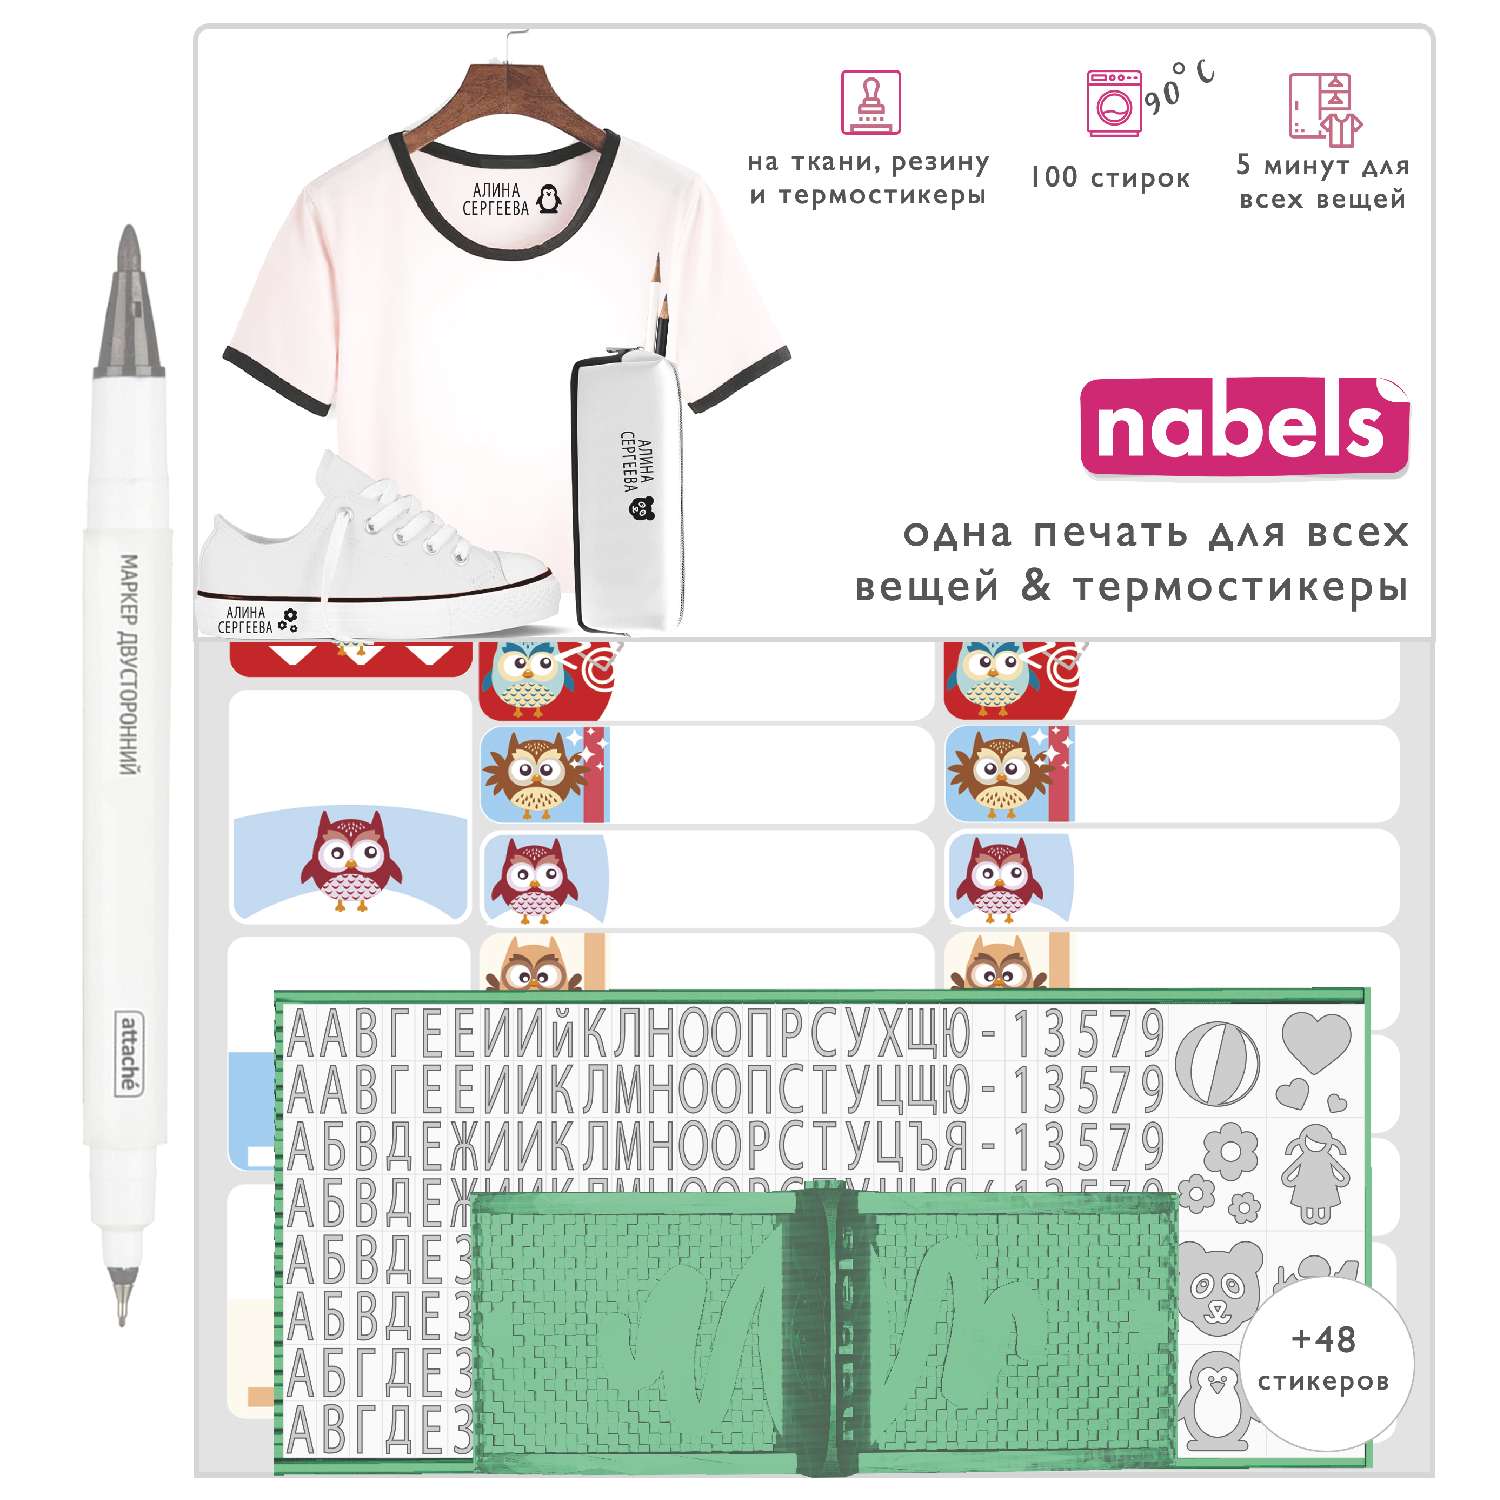 Набор Nabels для самонаборной печати с термостикерами Совята - фото 1